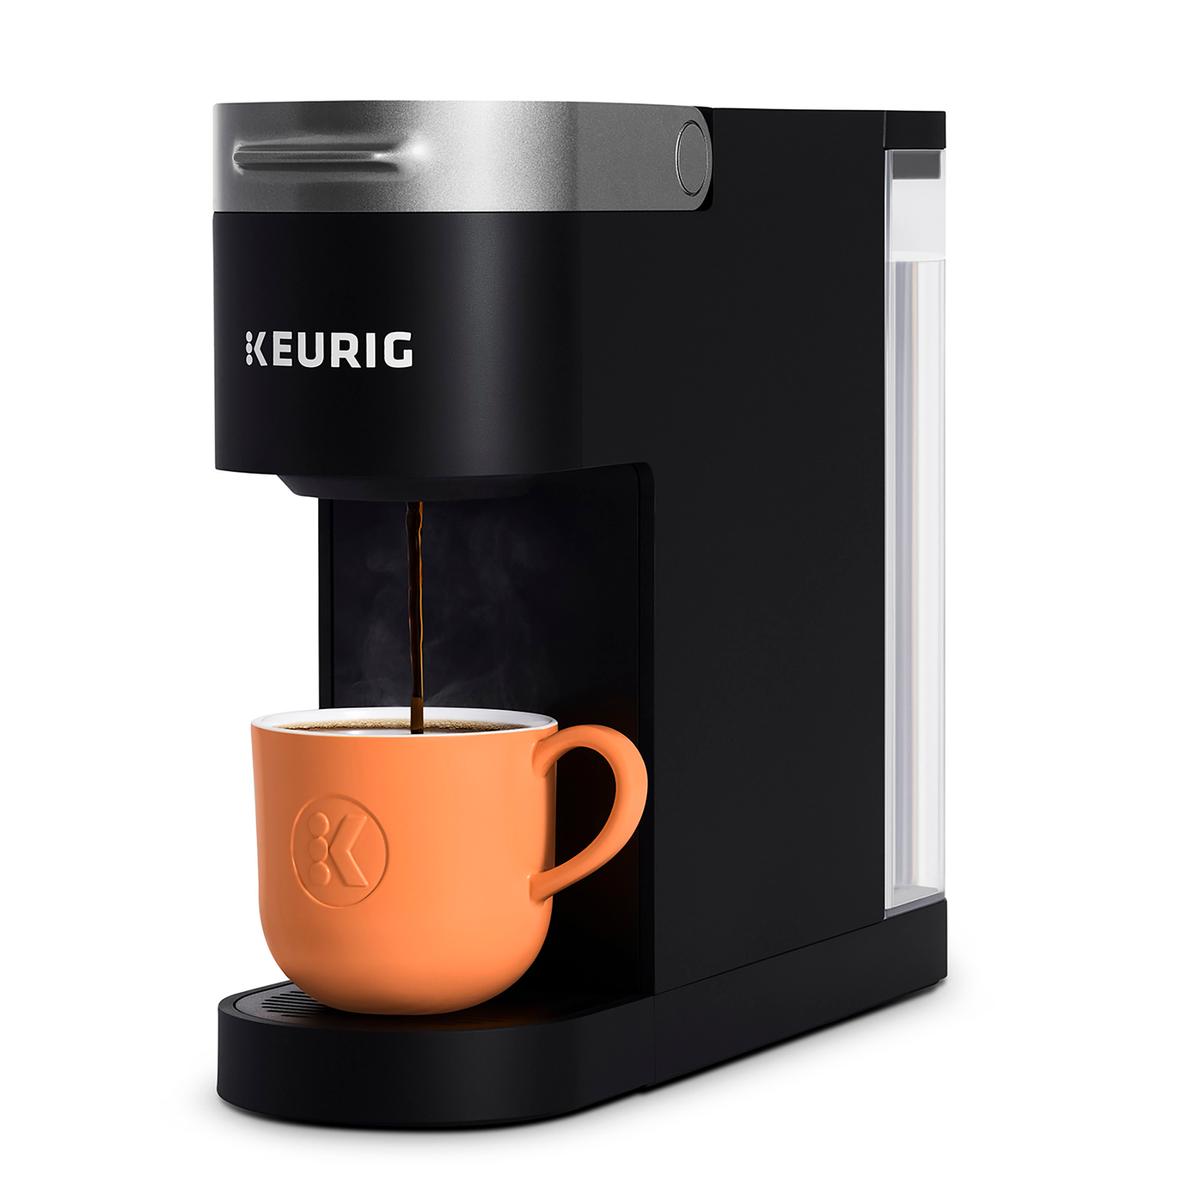 Customizable Keurig K-Slim Single Serve Coffee Maker - Black, Retail $100.00